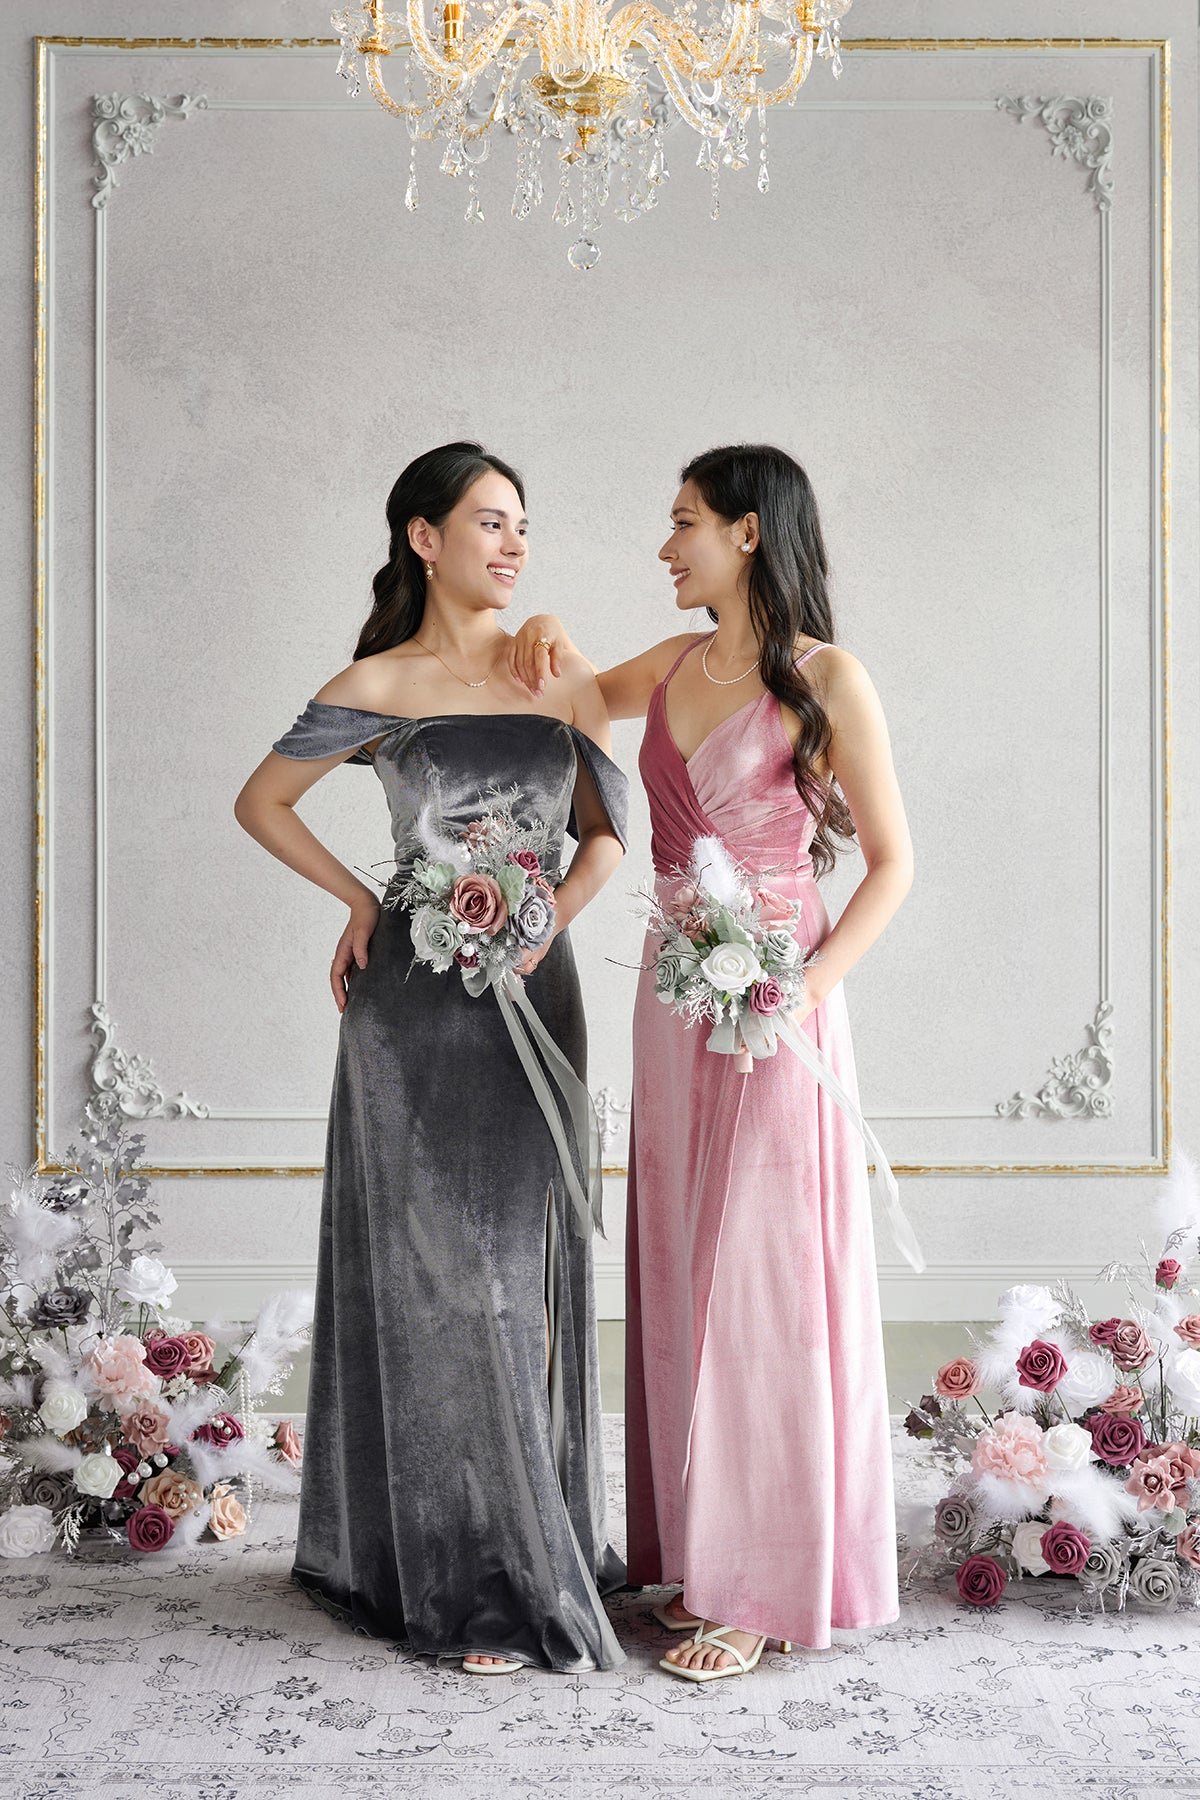 Bridesmaid Bouquet in Dusky Rose & Silver